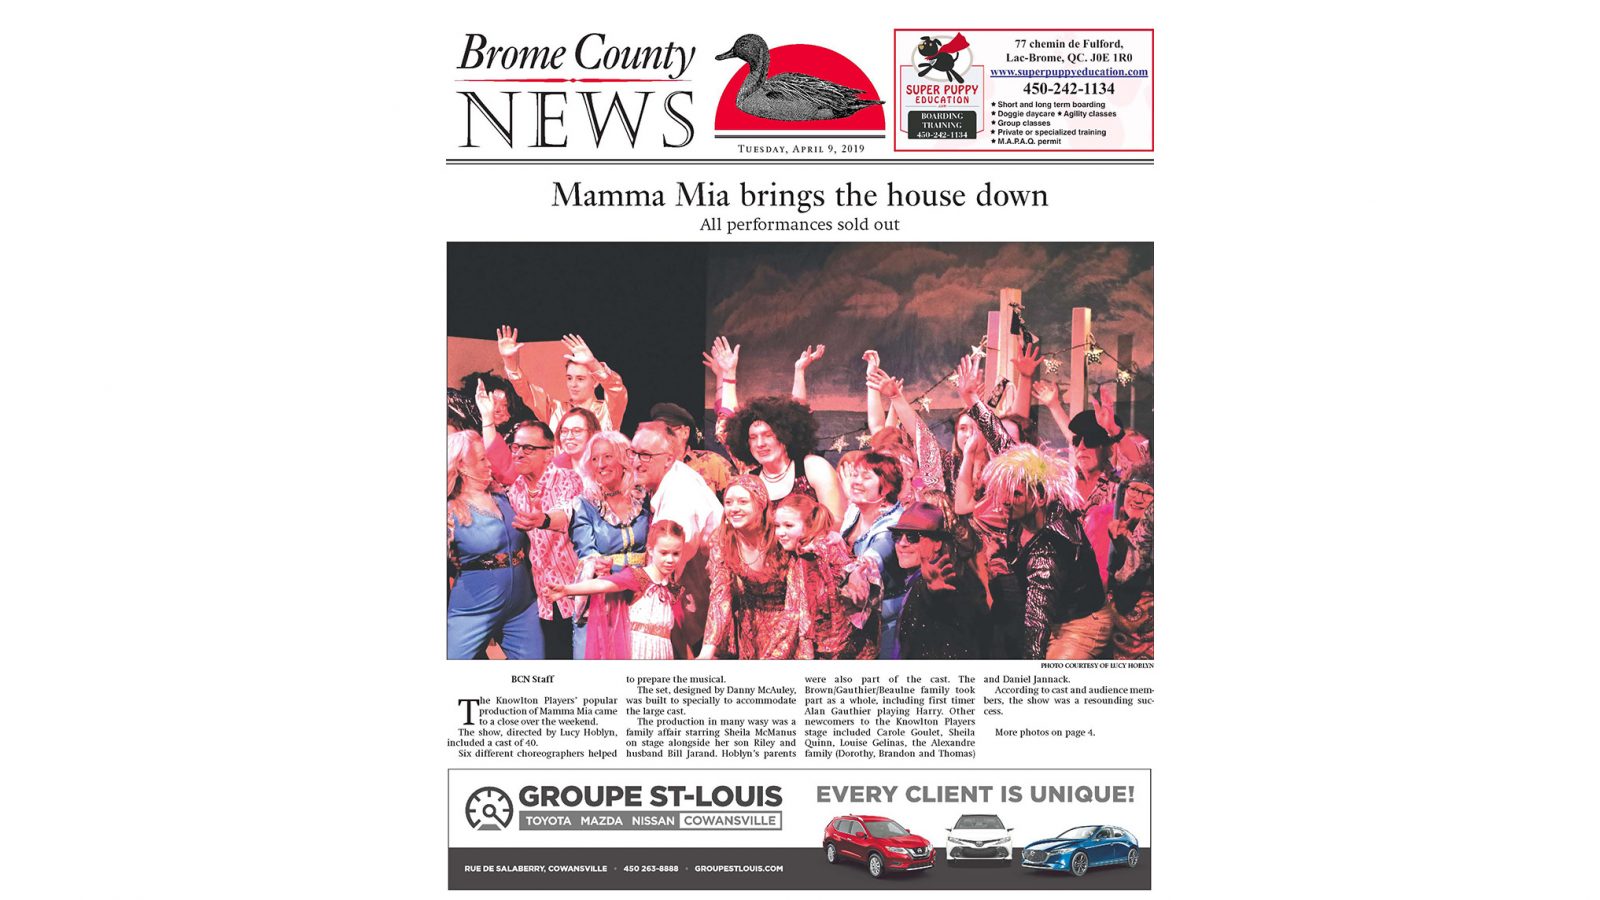 Brome County News – April 9, 2019 edition